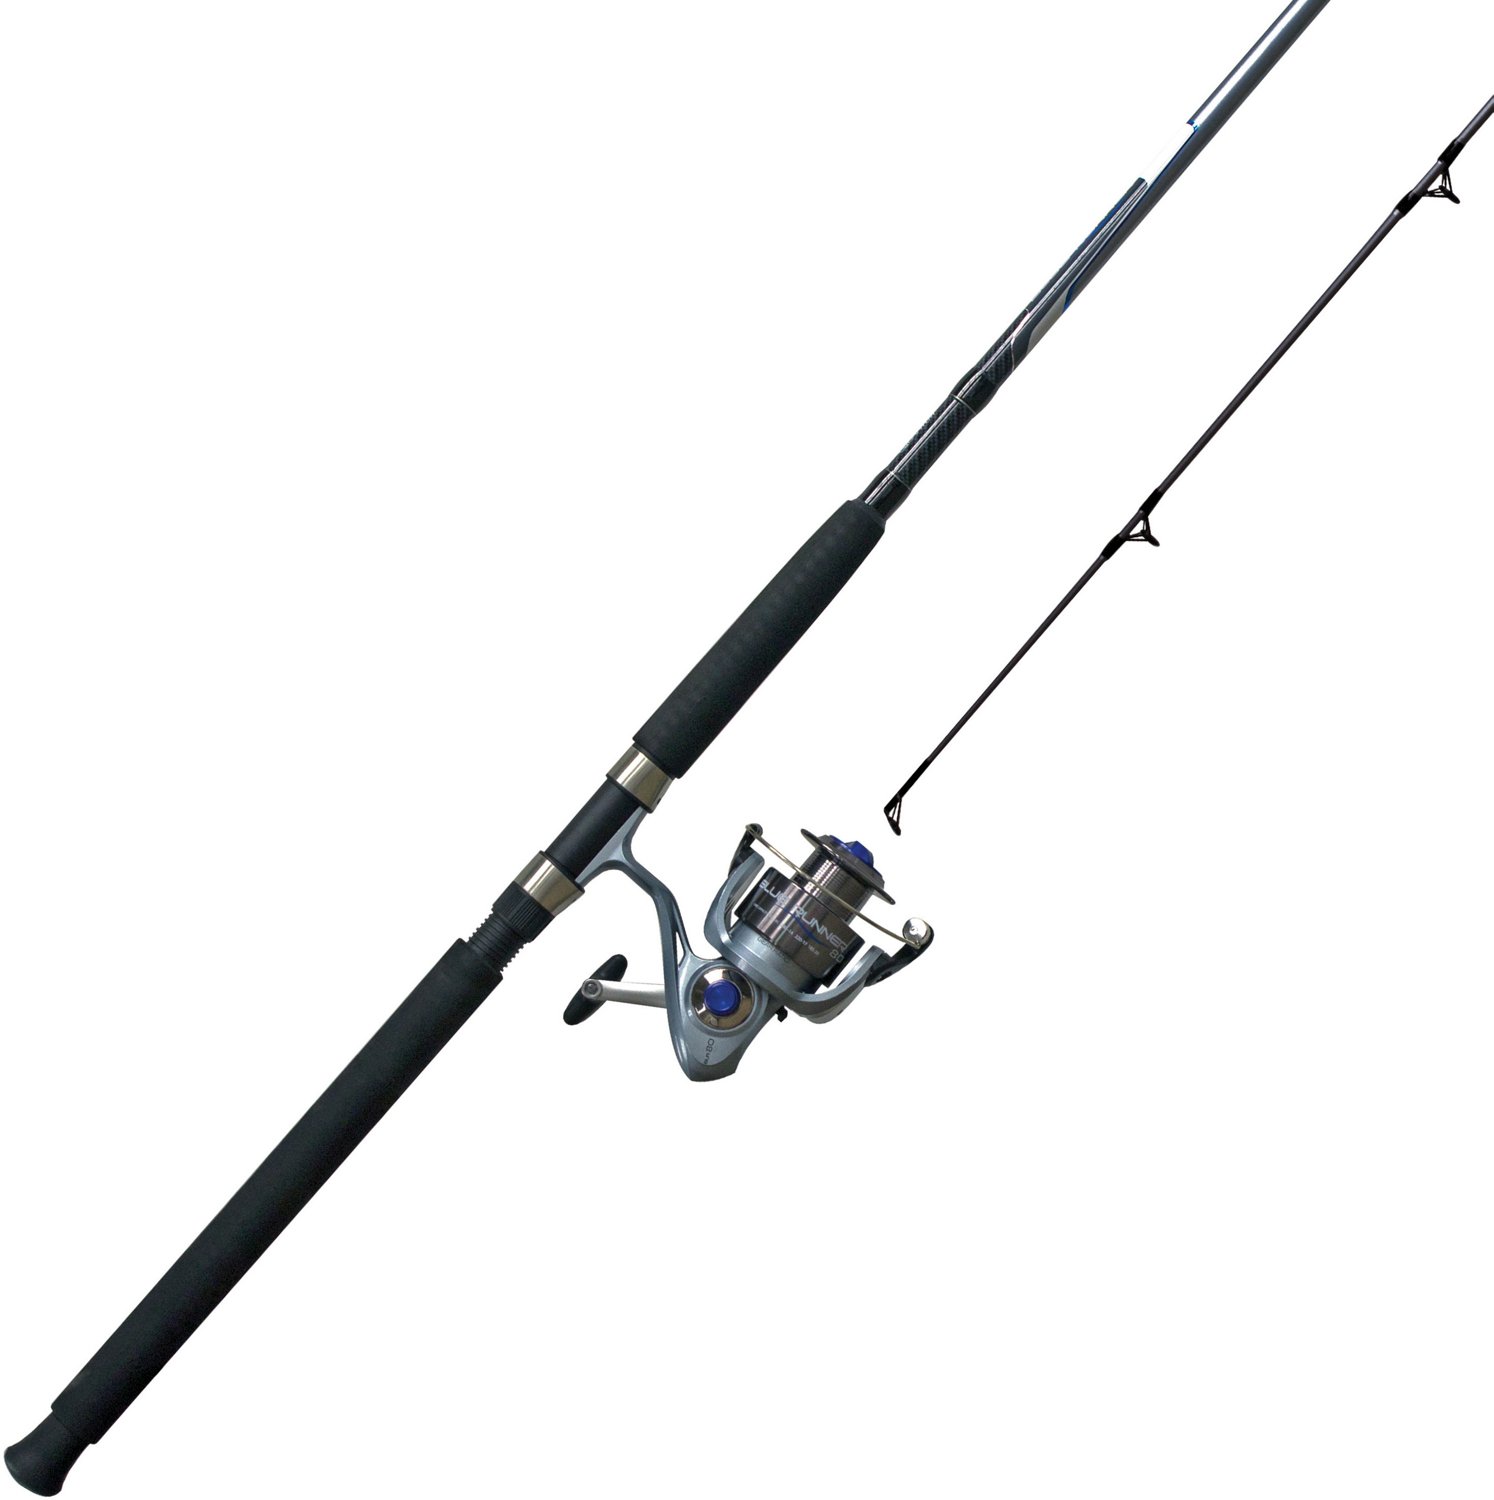 Beginner Open Face Spinning Rod and Reel 6 Ft Fiberglass Fishing Pole